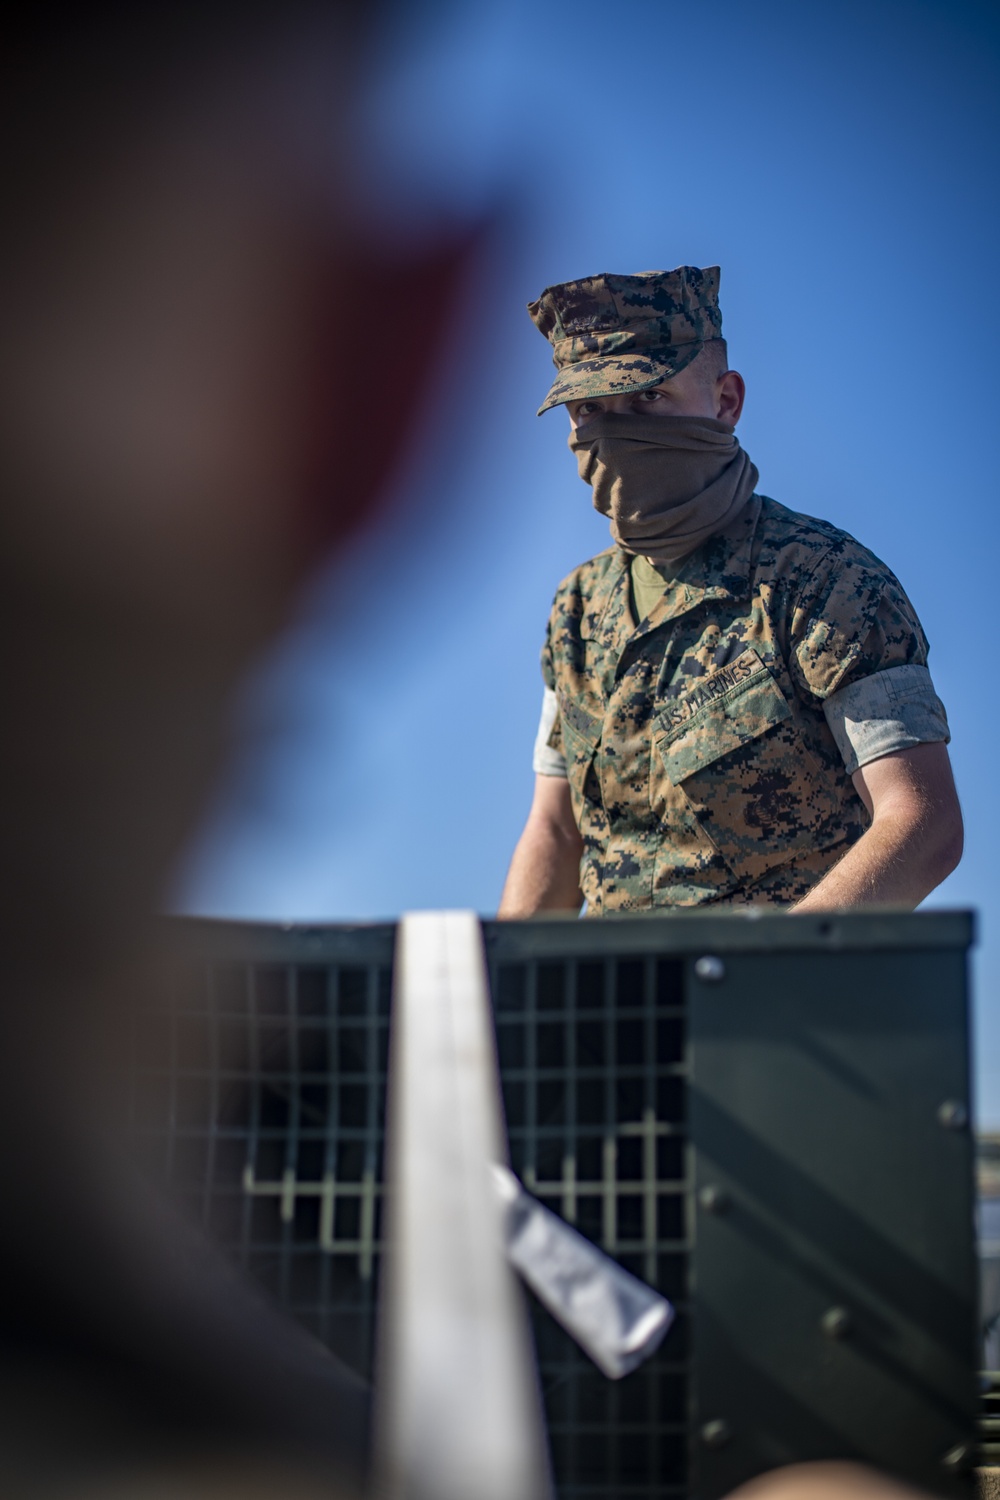 Task force Marines prepare for Latin America deployment